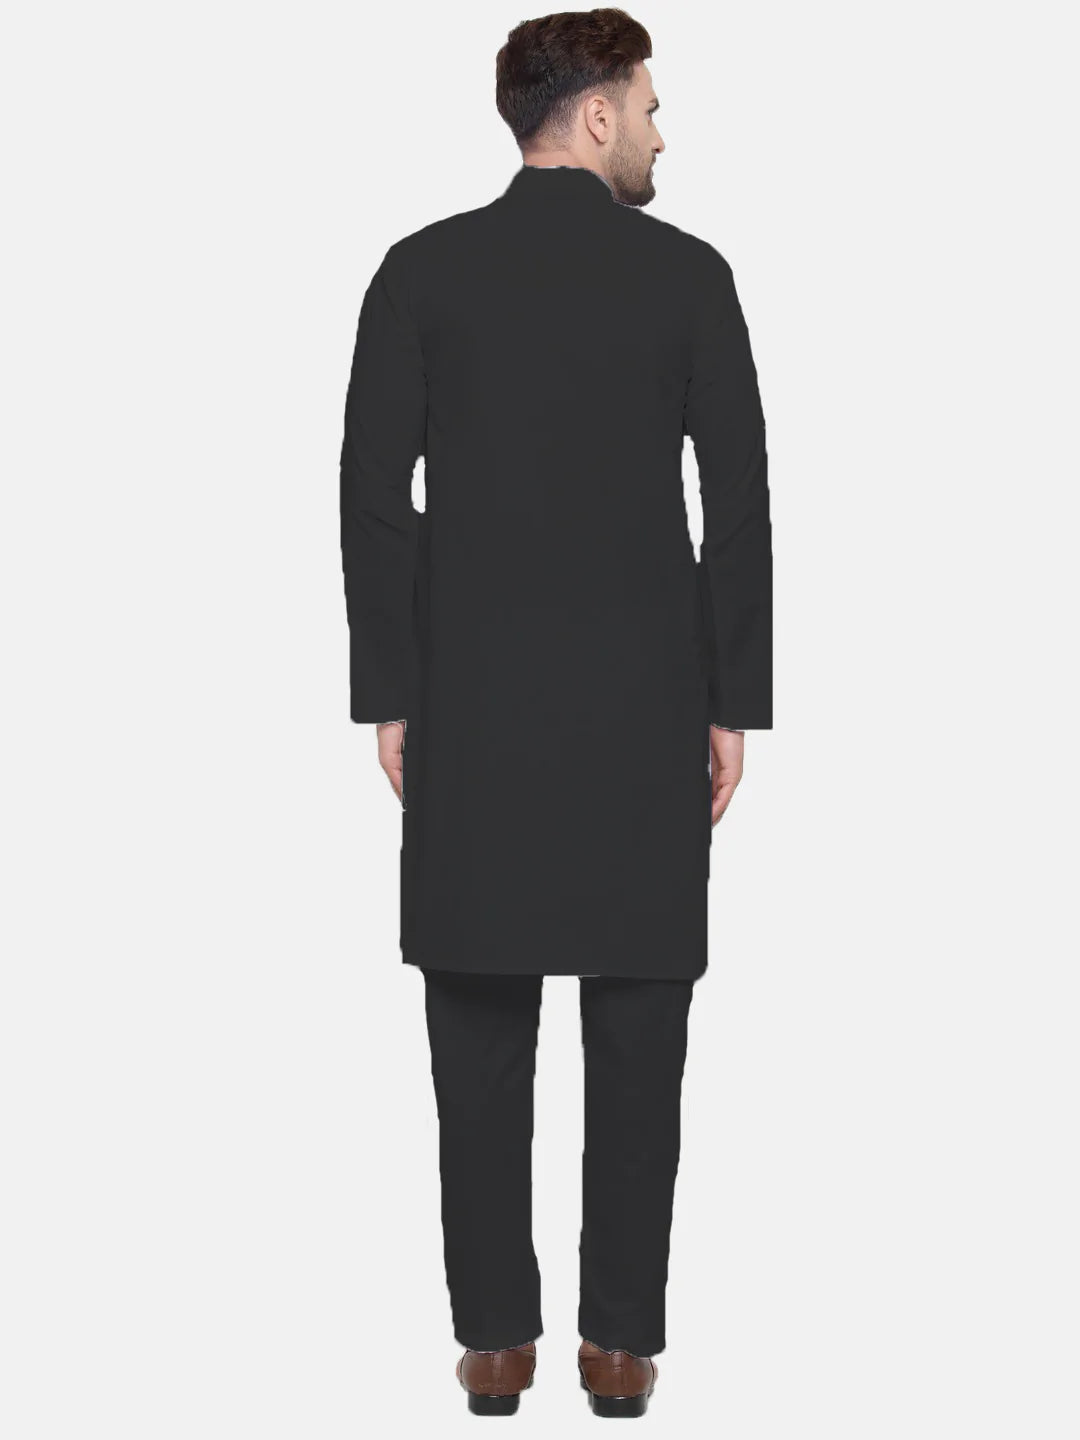 Jompers Men's Black Solid Cotton Kurta Payjama Set ( JOKP 555 Black )